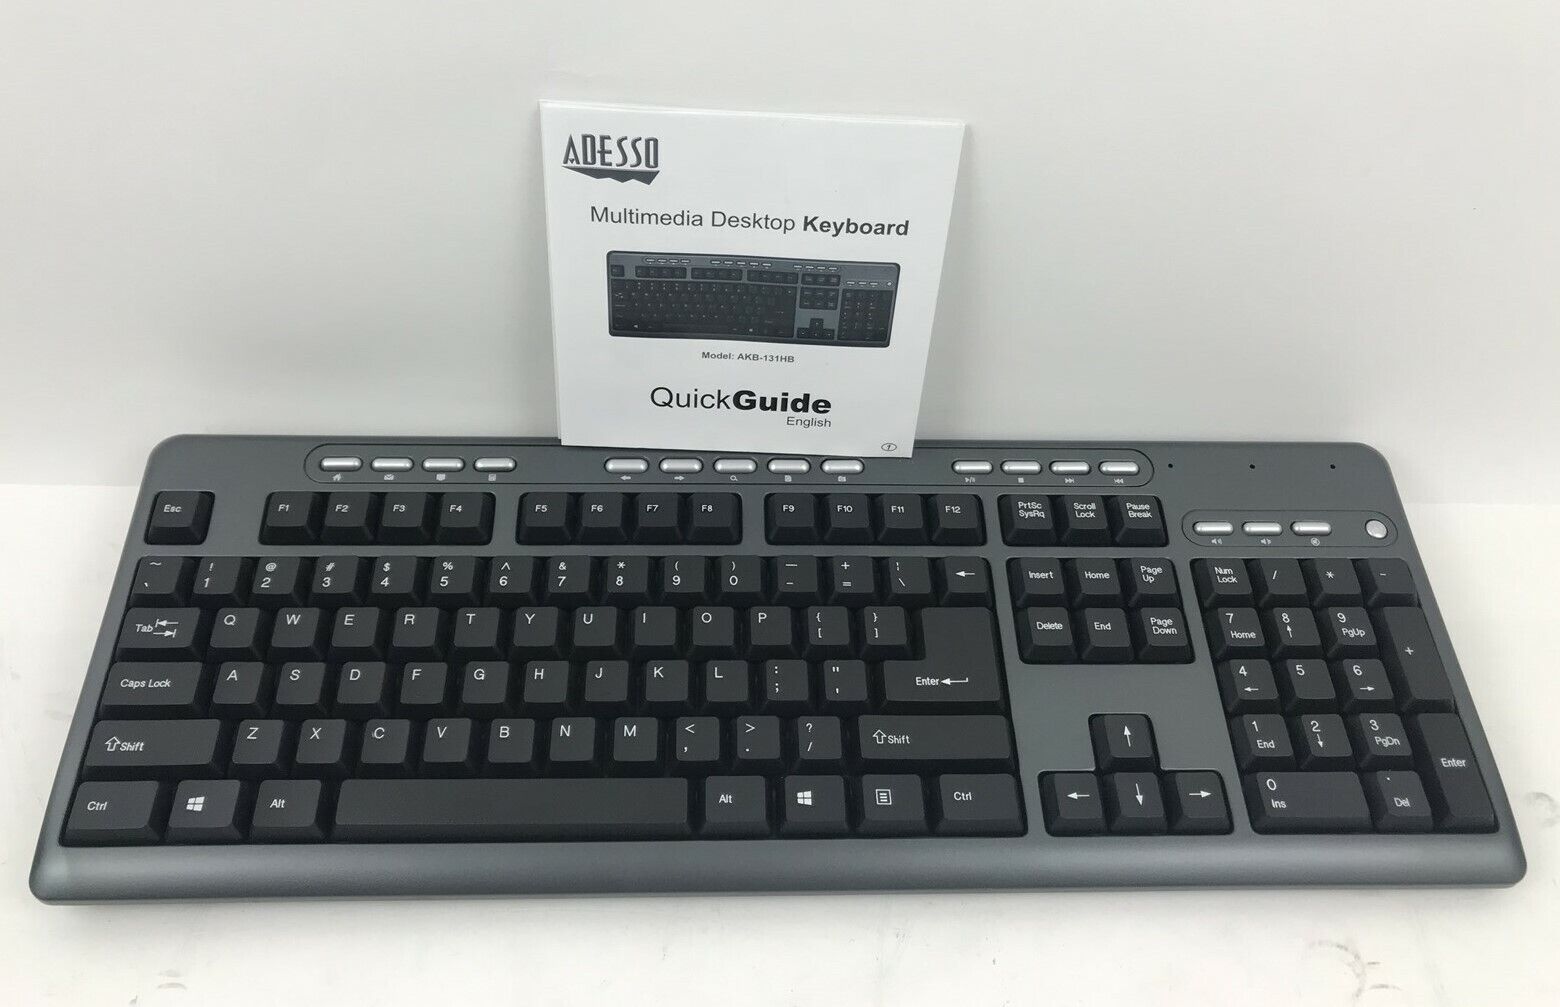 ADESSO Multimedia USB Keyboard with 2-Port USB Hub AKB-131HB Desktop Keyboard